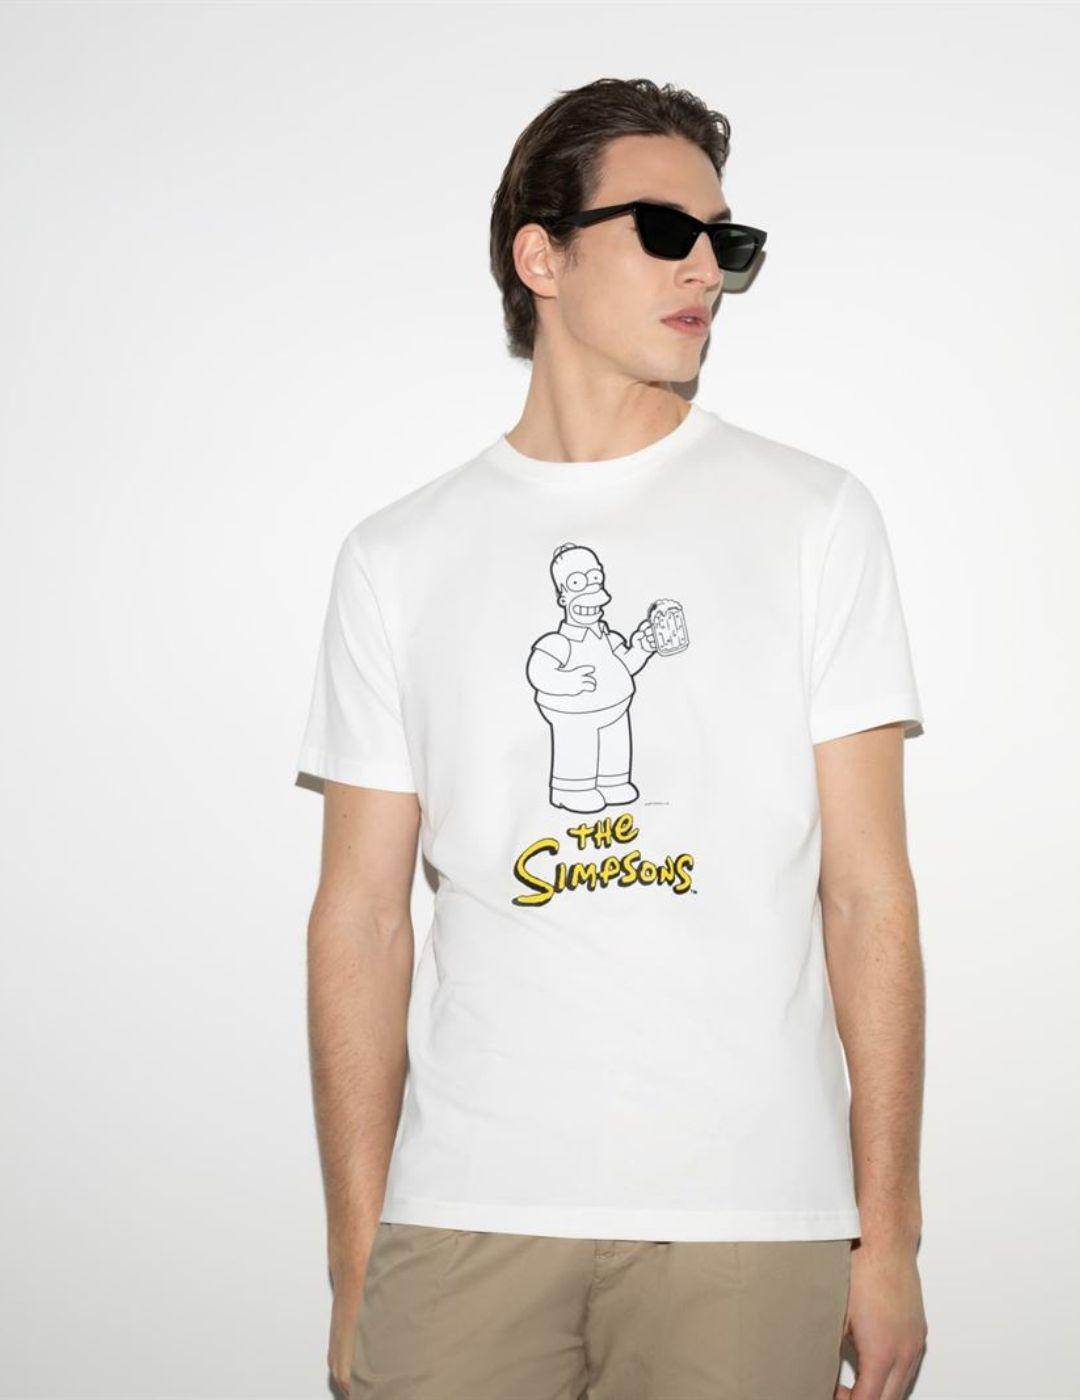 Camiseta A. Morato Blanca regular fit ' The Simpson'